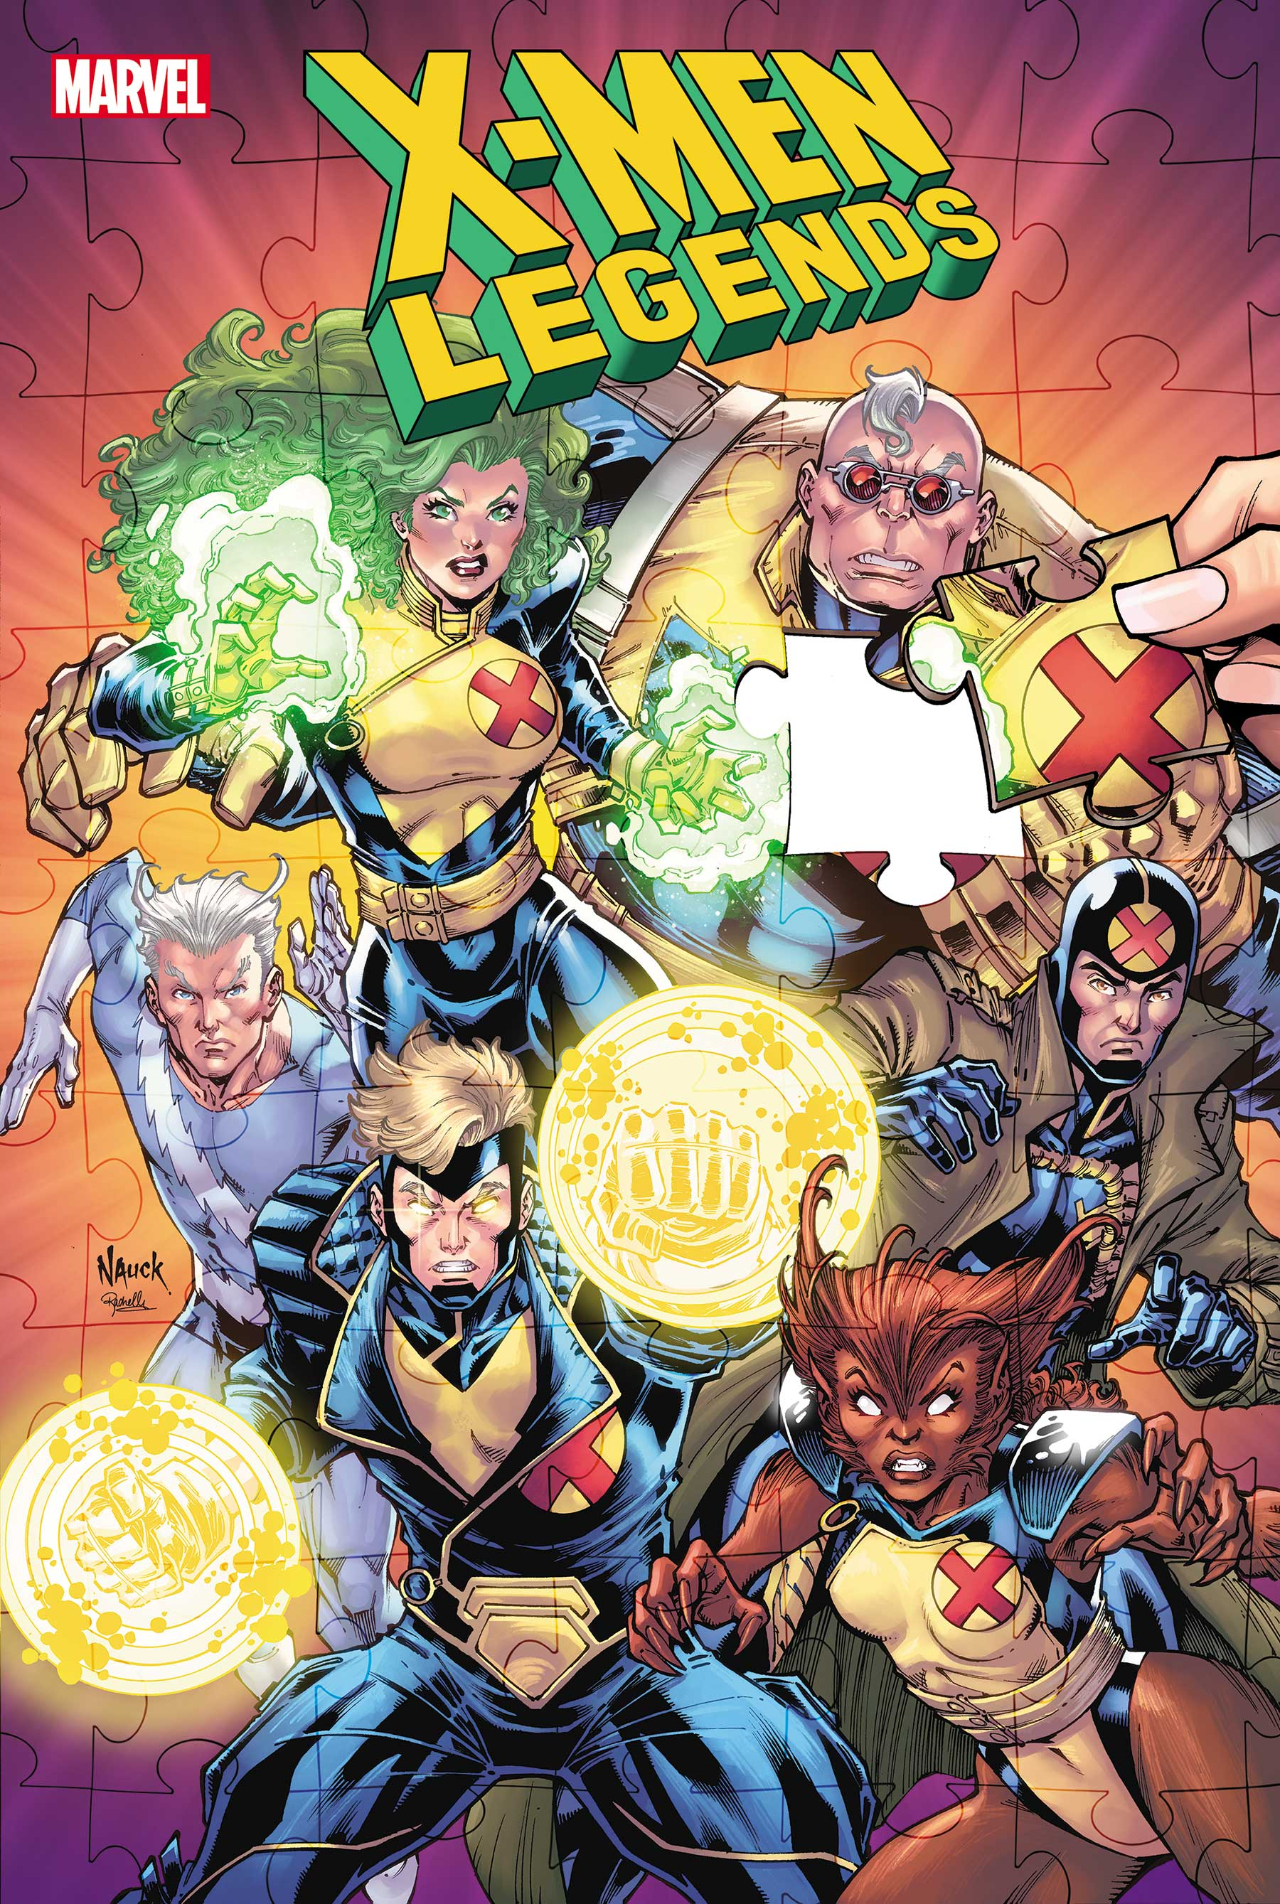 Leyendas de X-Men # 5